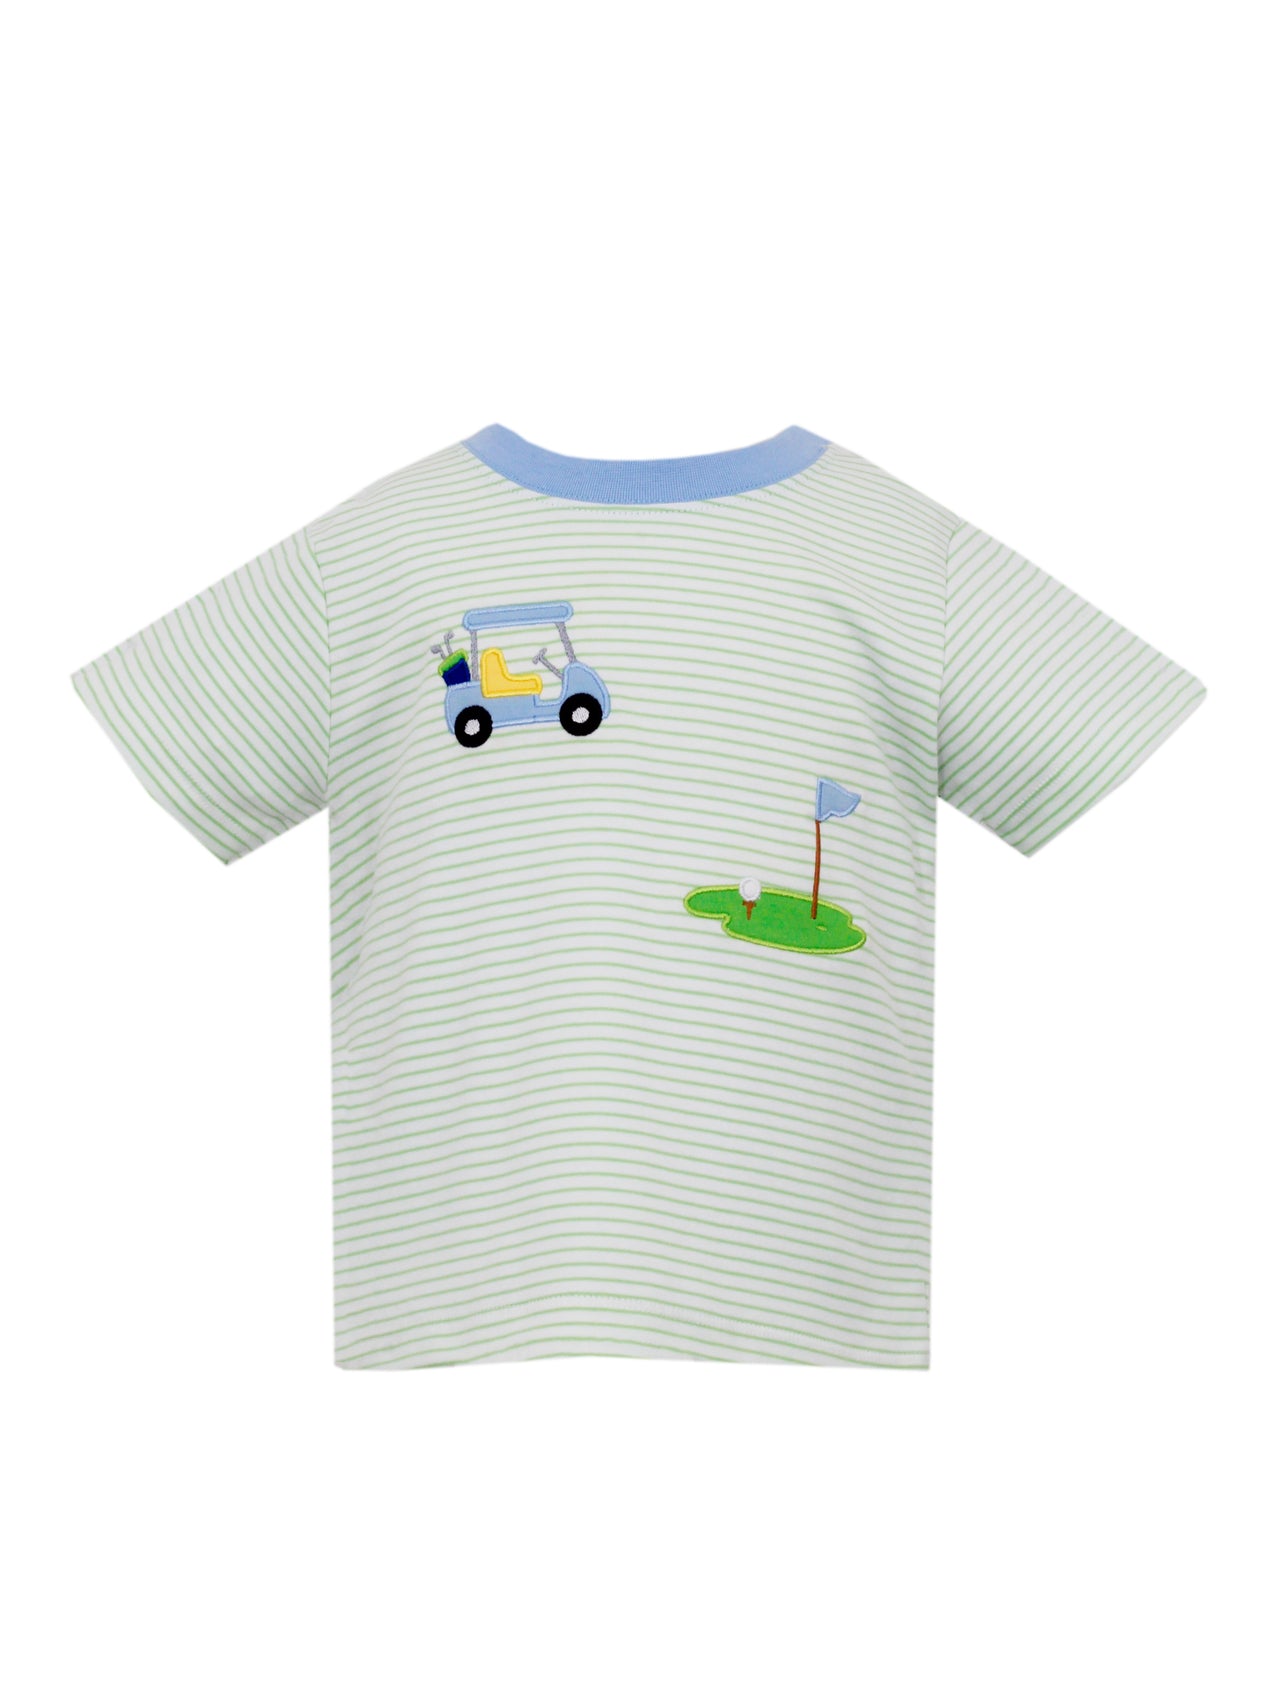 Claire & Charlie Golf Green Knit Stripe Boy's T-Shirt 5013P-CS24 5103